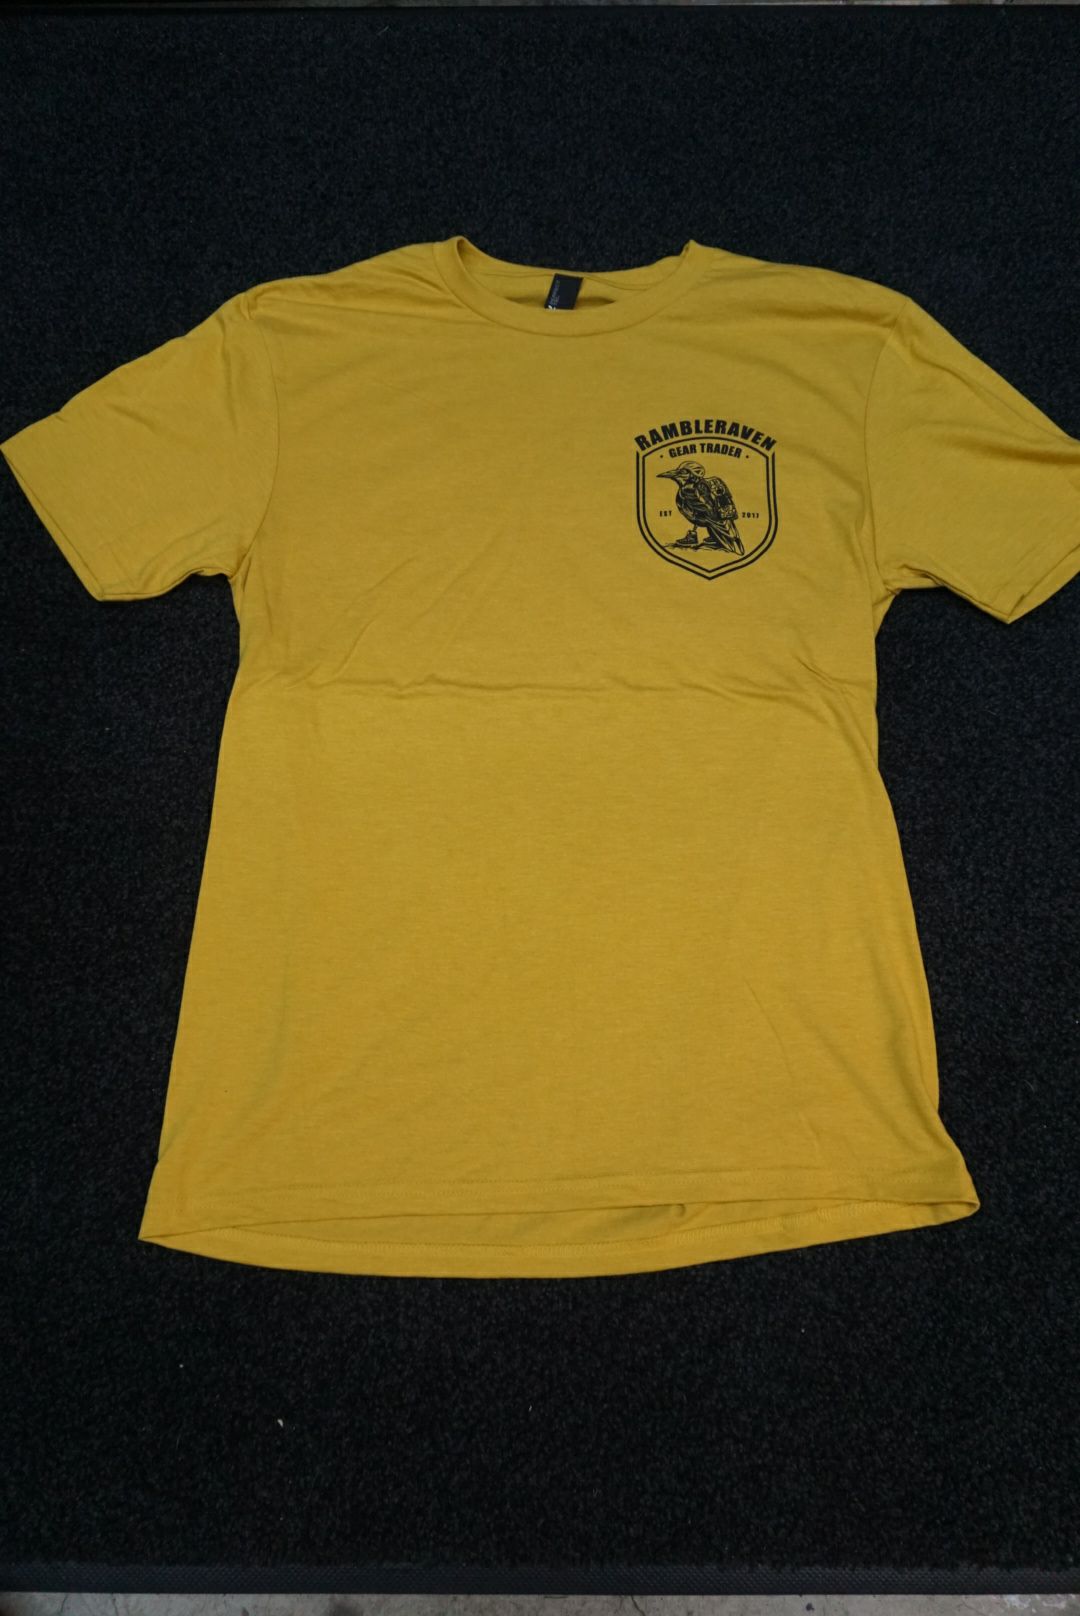 Mountaineering Raven Rambleraven T-Shirt